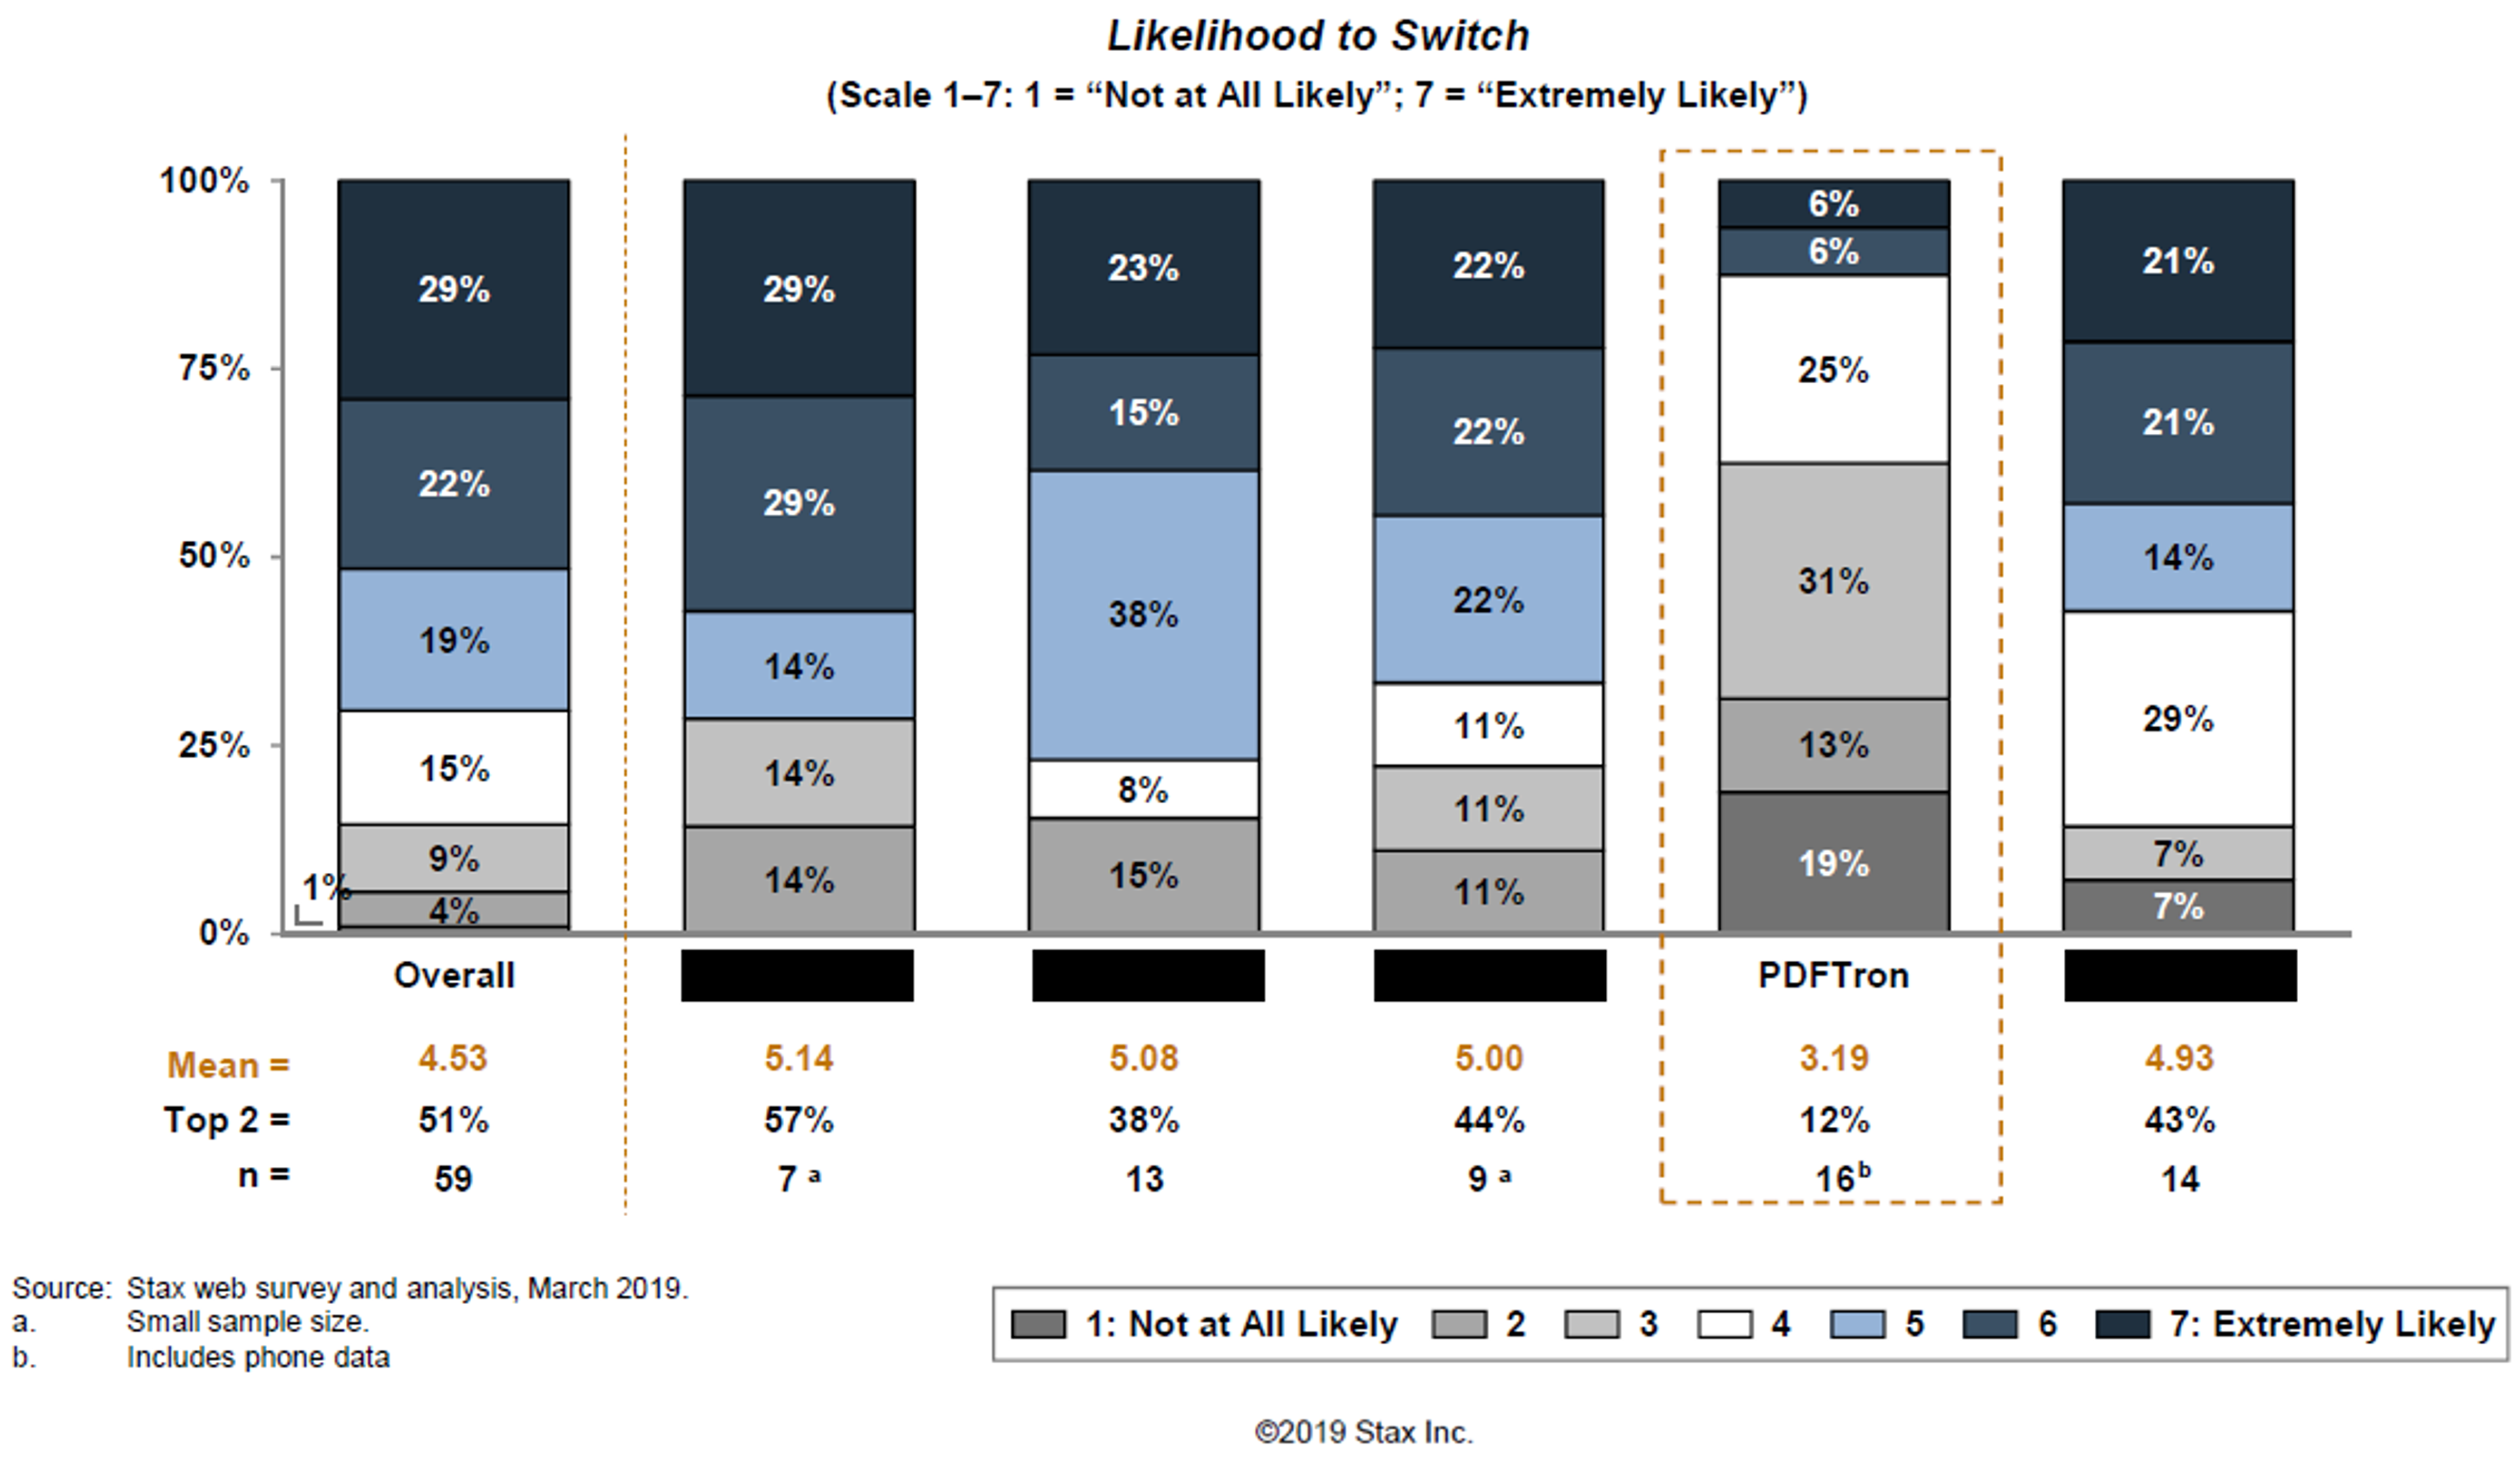 Likelihood to switch compared across top 5 PDF SDK vendors